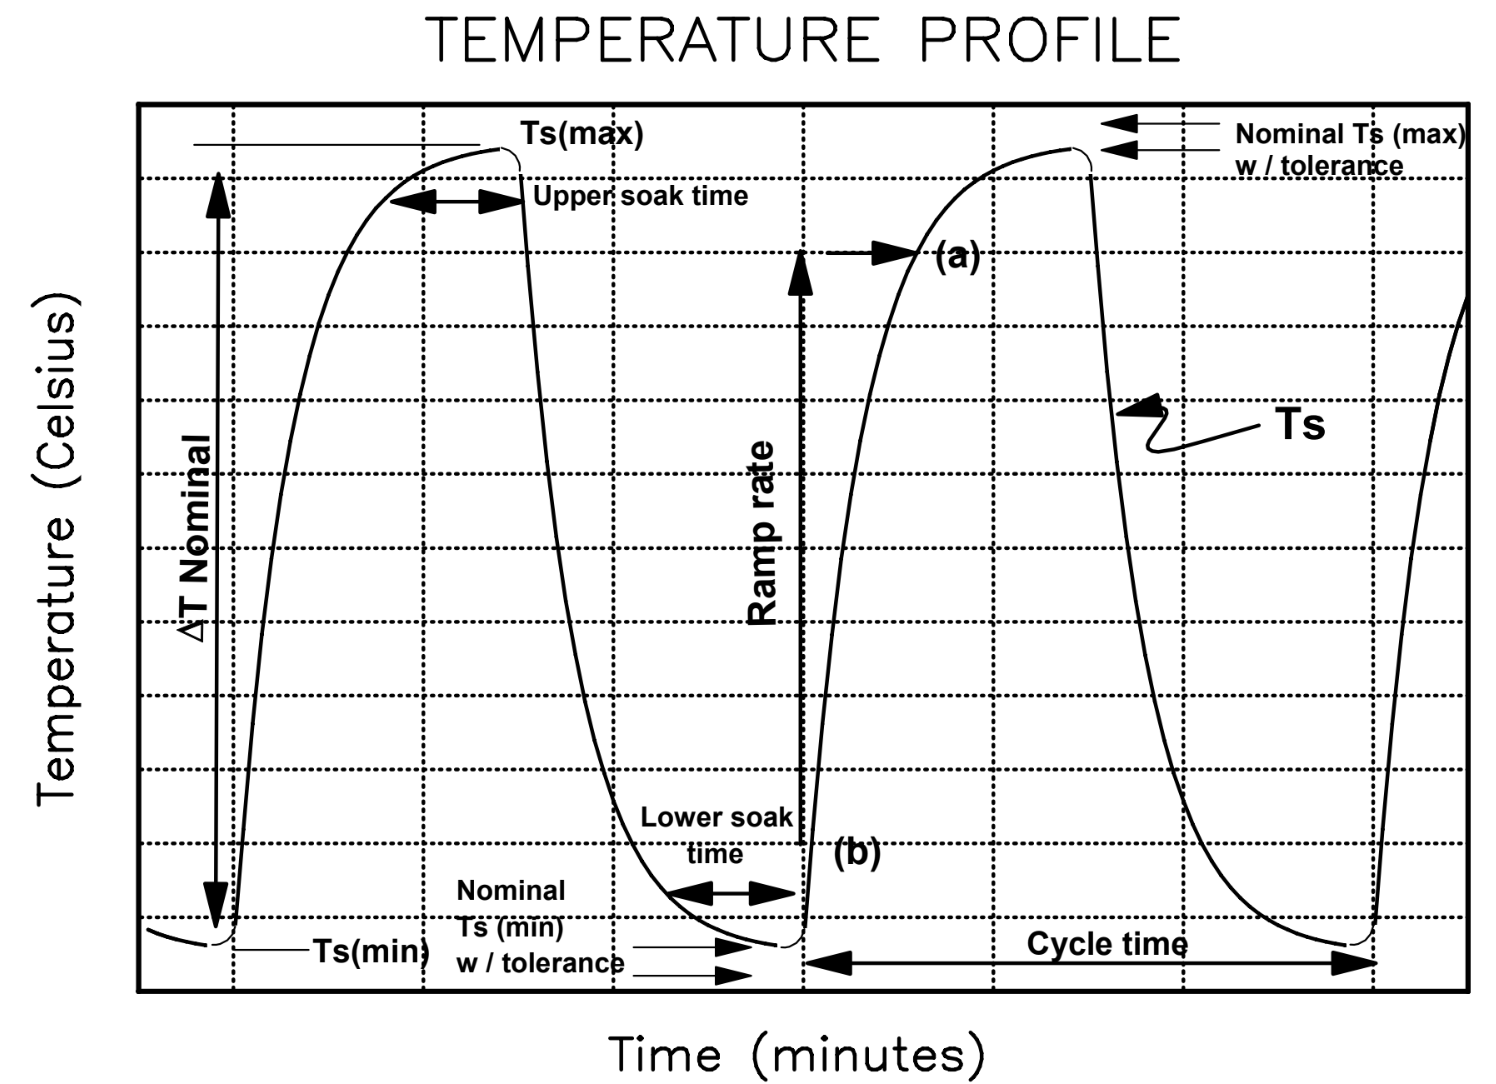 Sample temperature profile for TCT